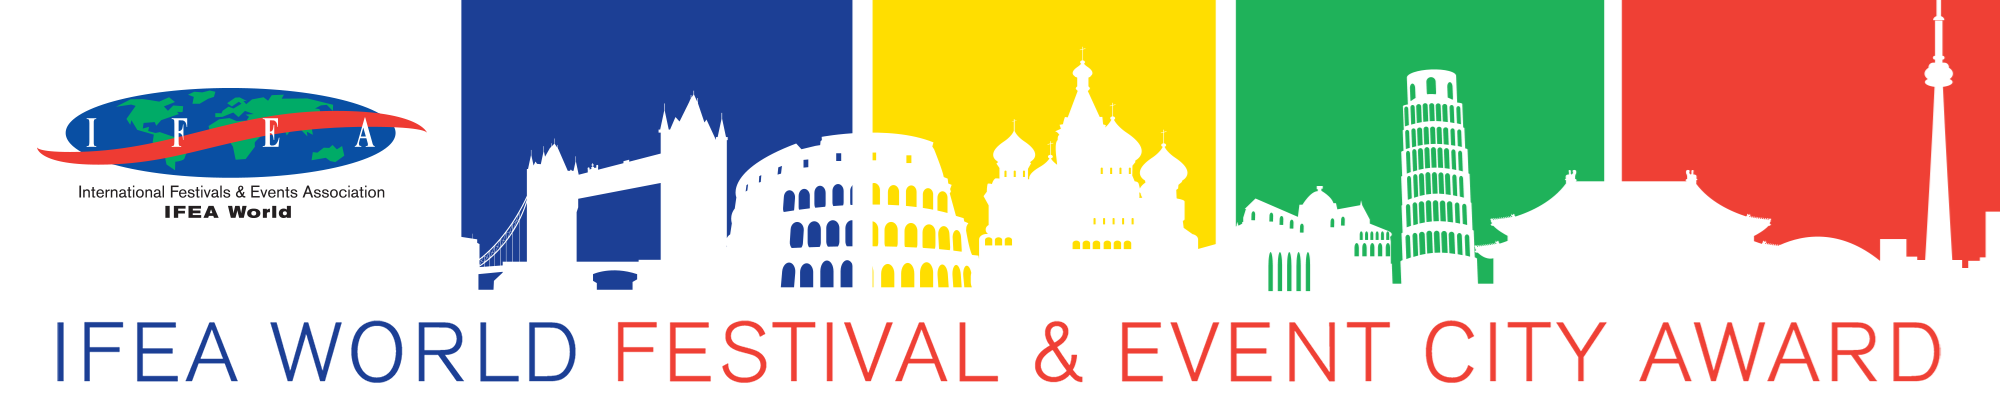 IFEA World Festival & Event City